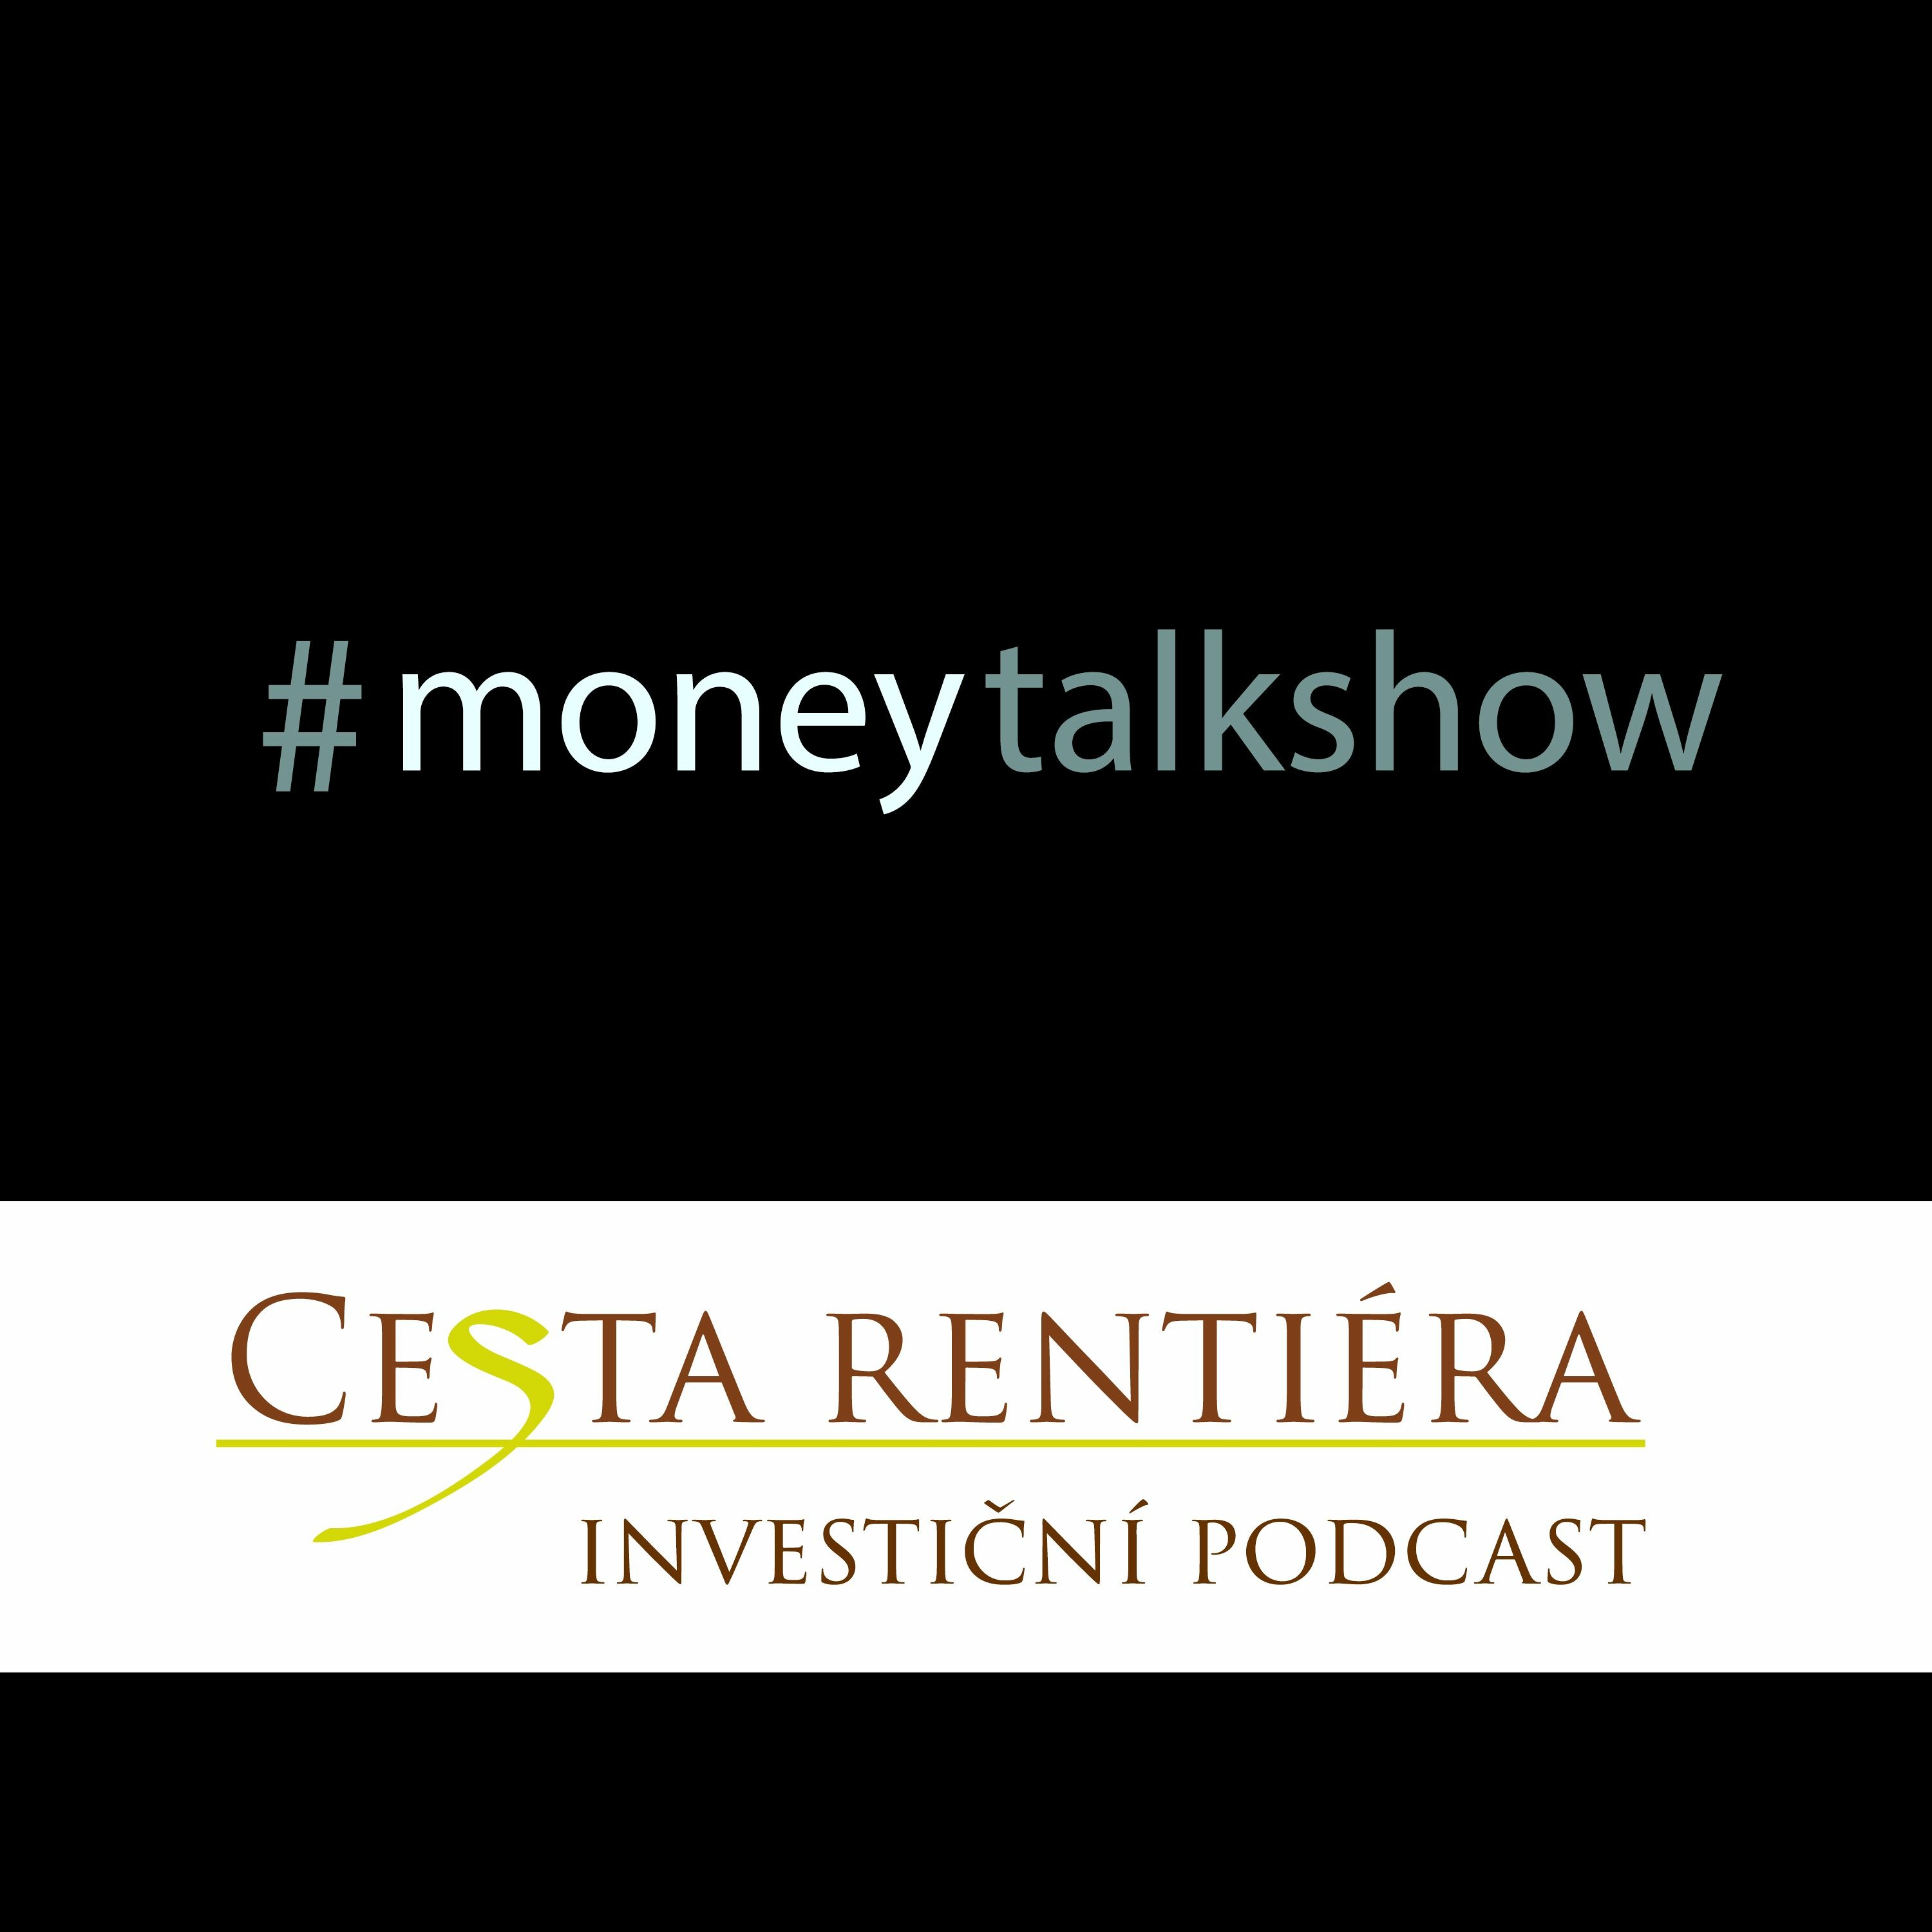 #moneytalkshow ep.31